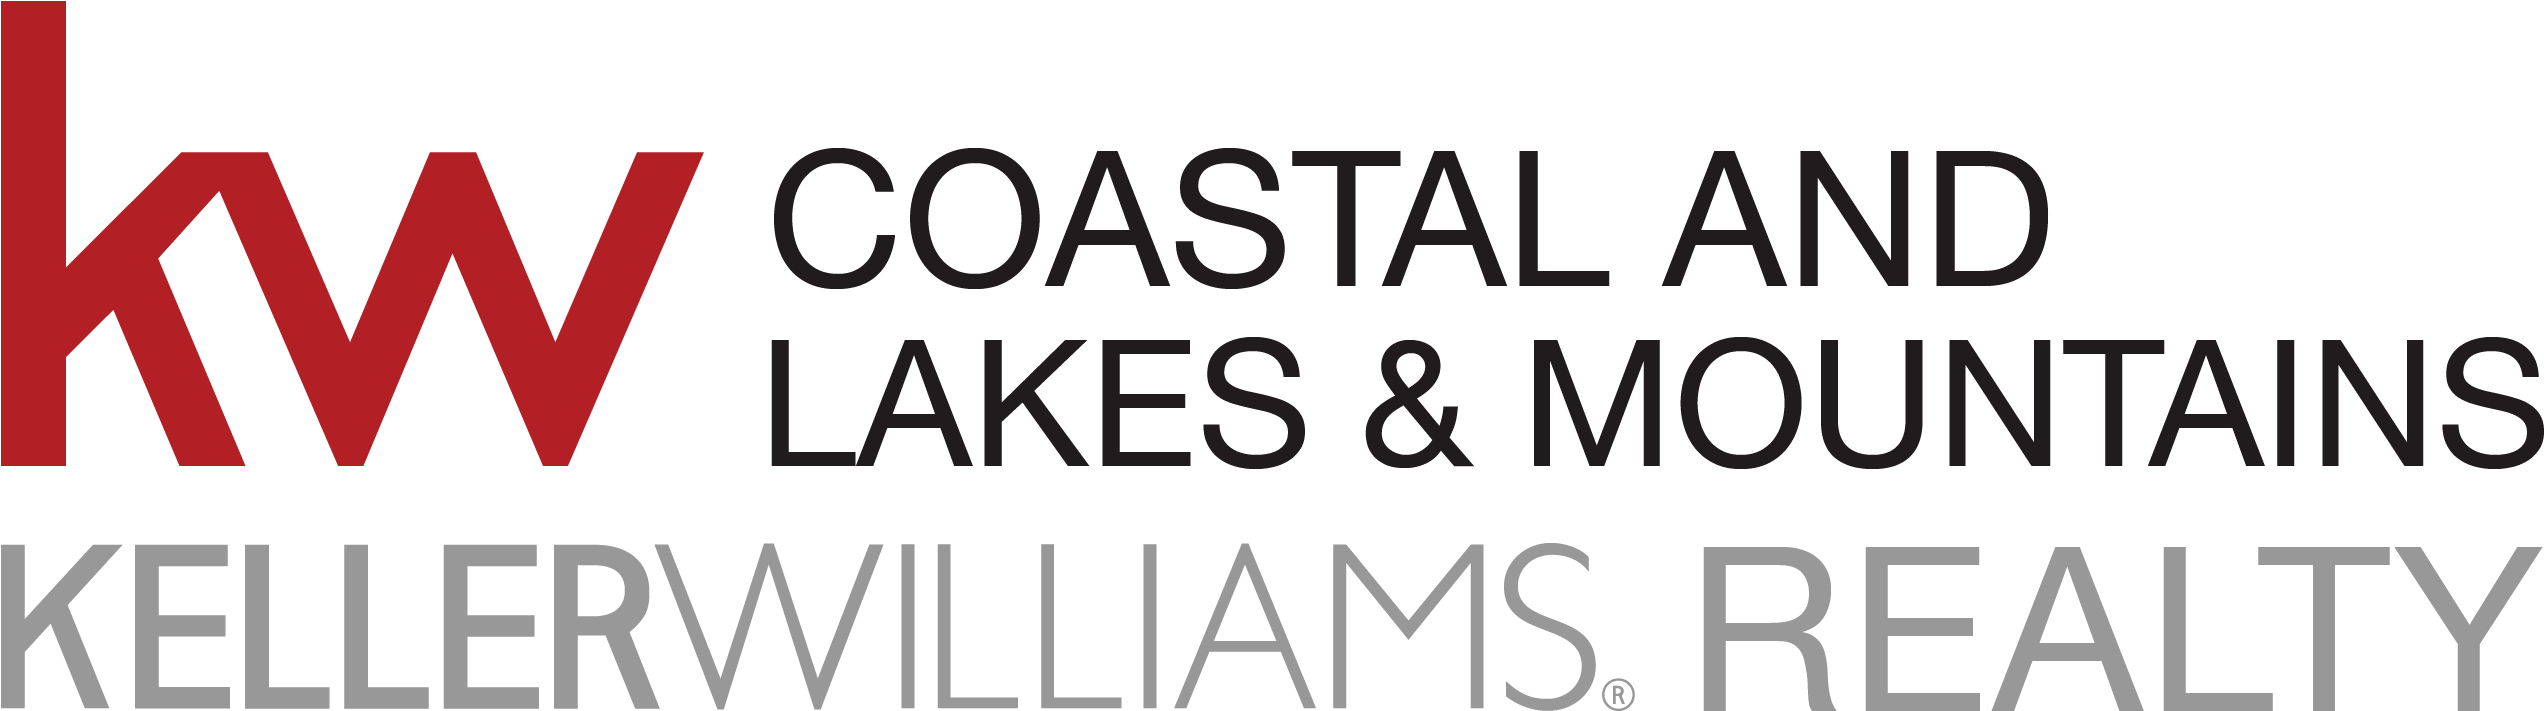 Keller Williams Coastal Realty Clipart (2550x820), Png Download